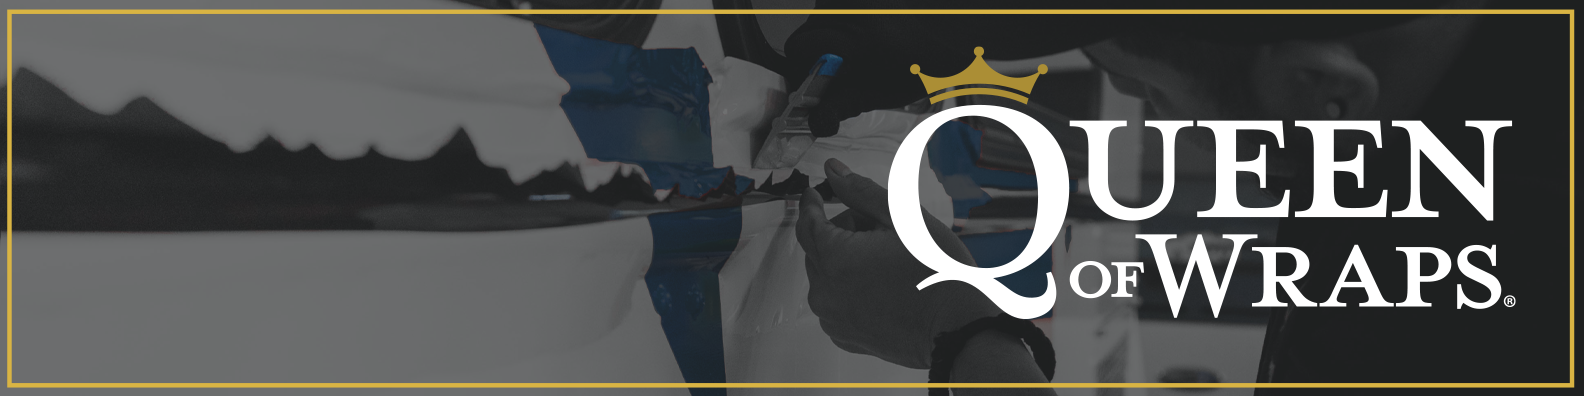 Queen_of_Wraps_logo